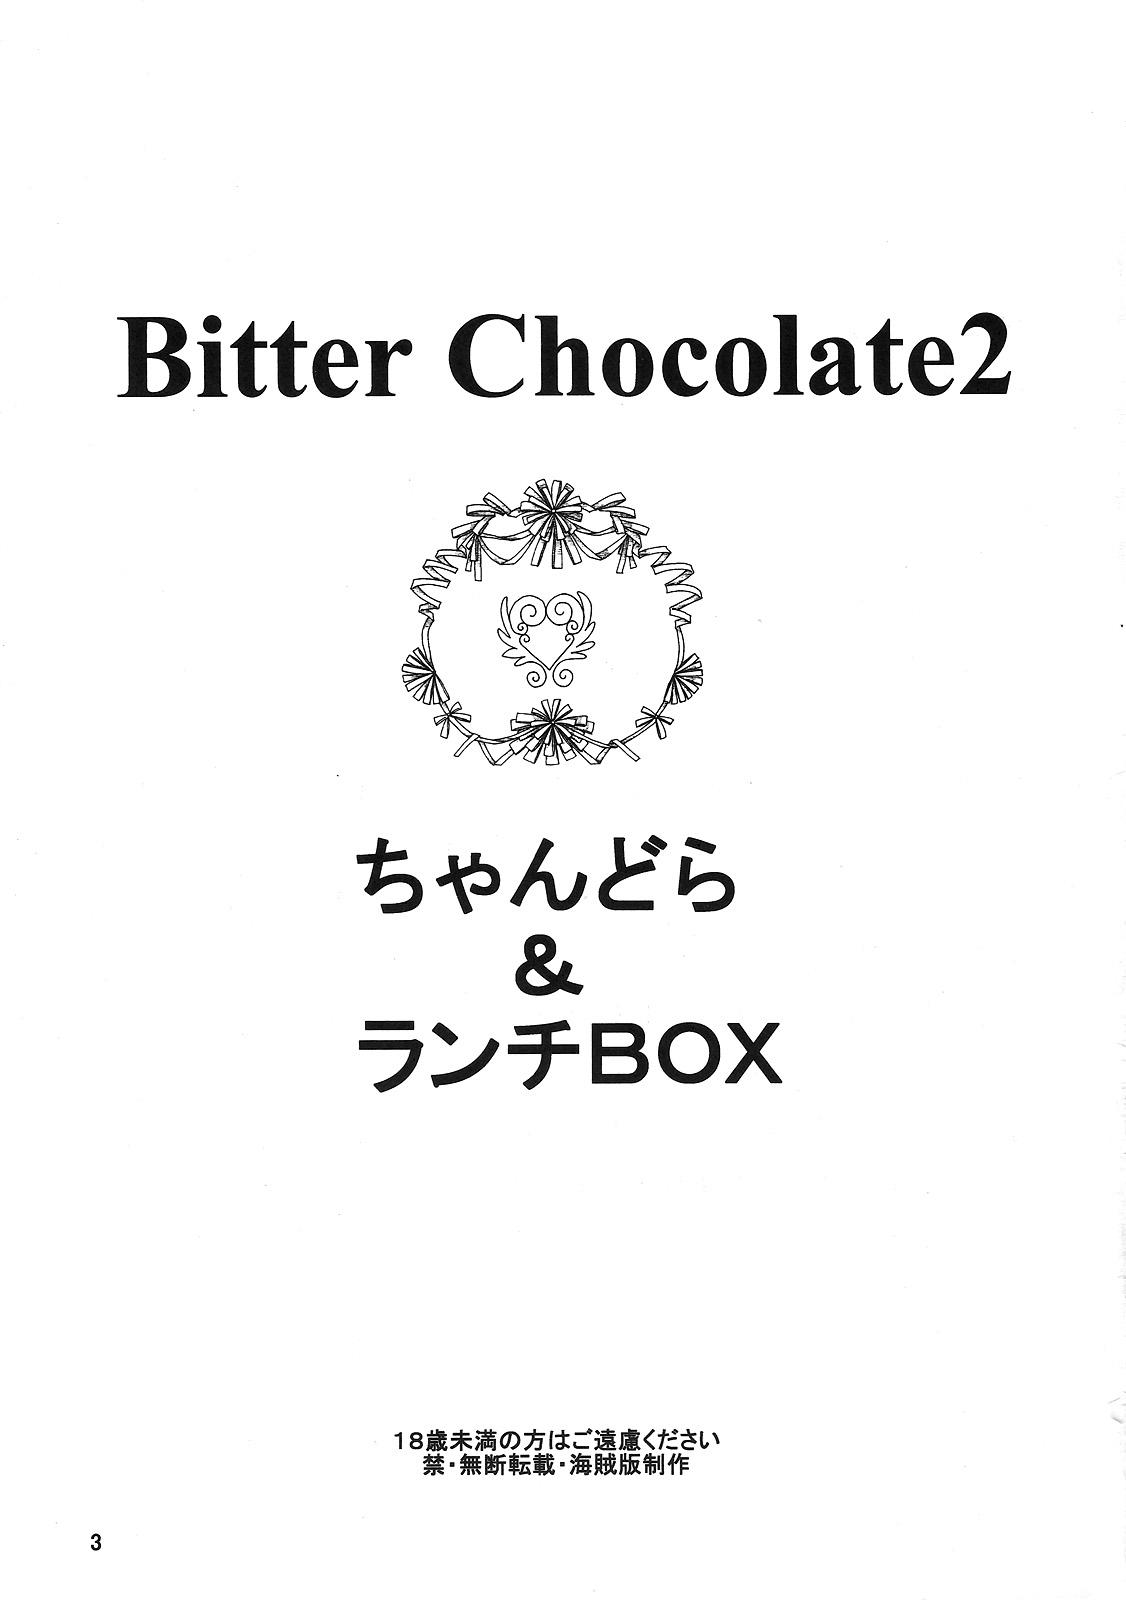 Lunch Box 71 - Bitter Chocolate 2 2